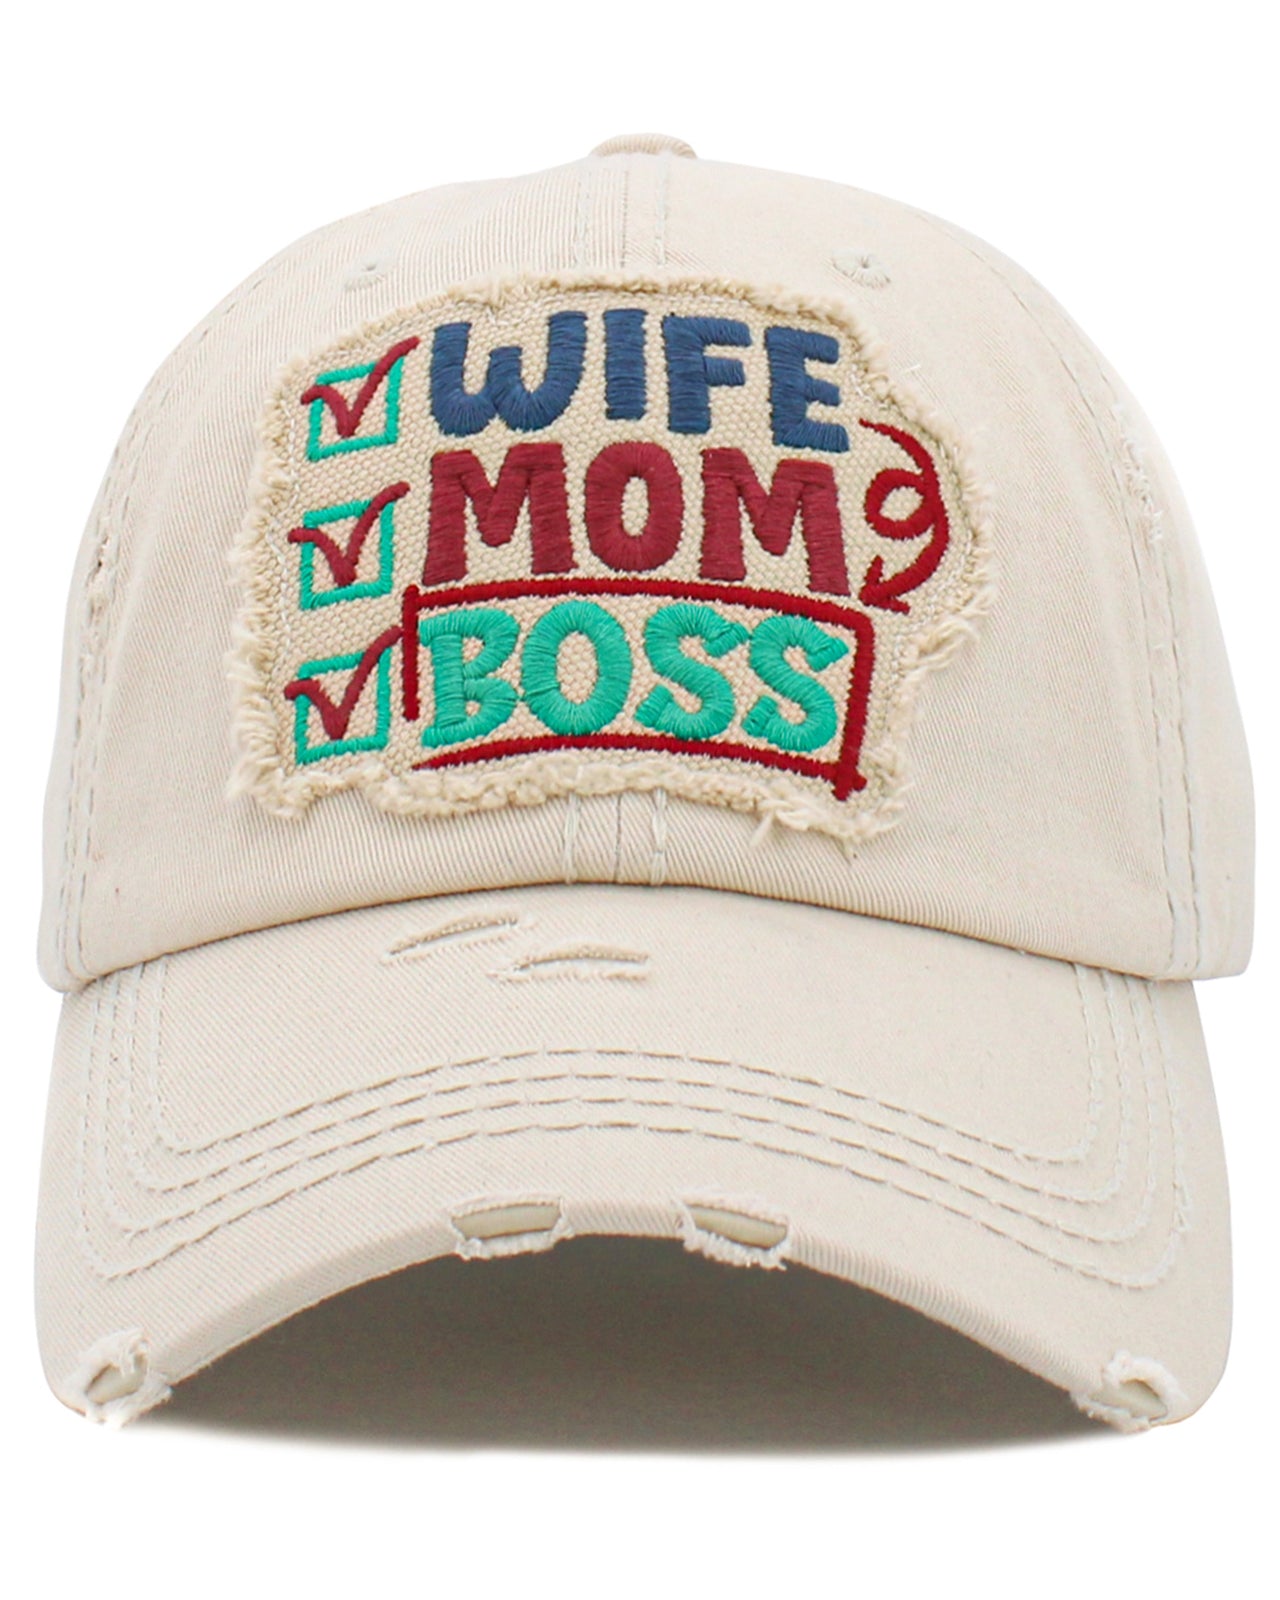 Wife Mom Boss Hat - Stone